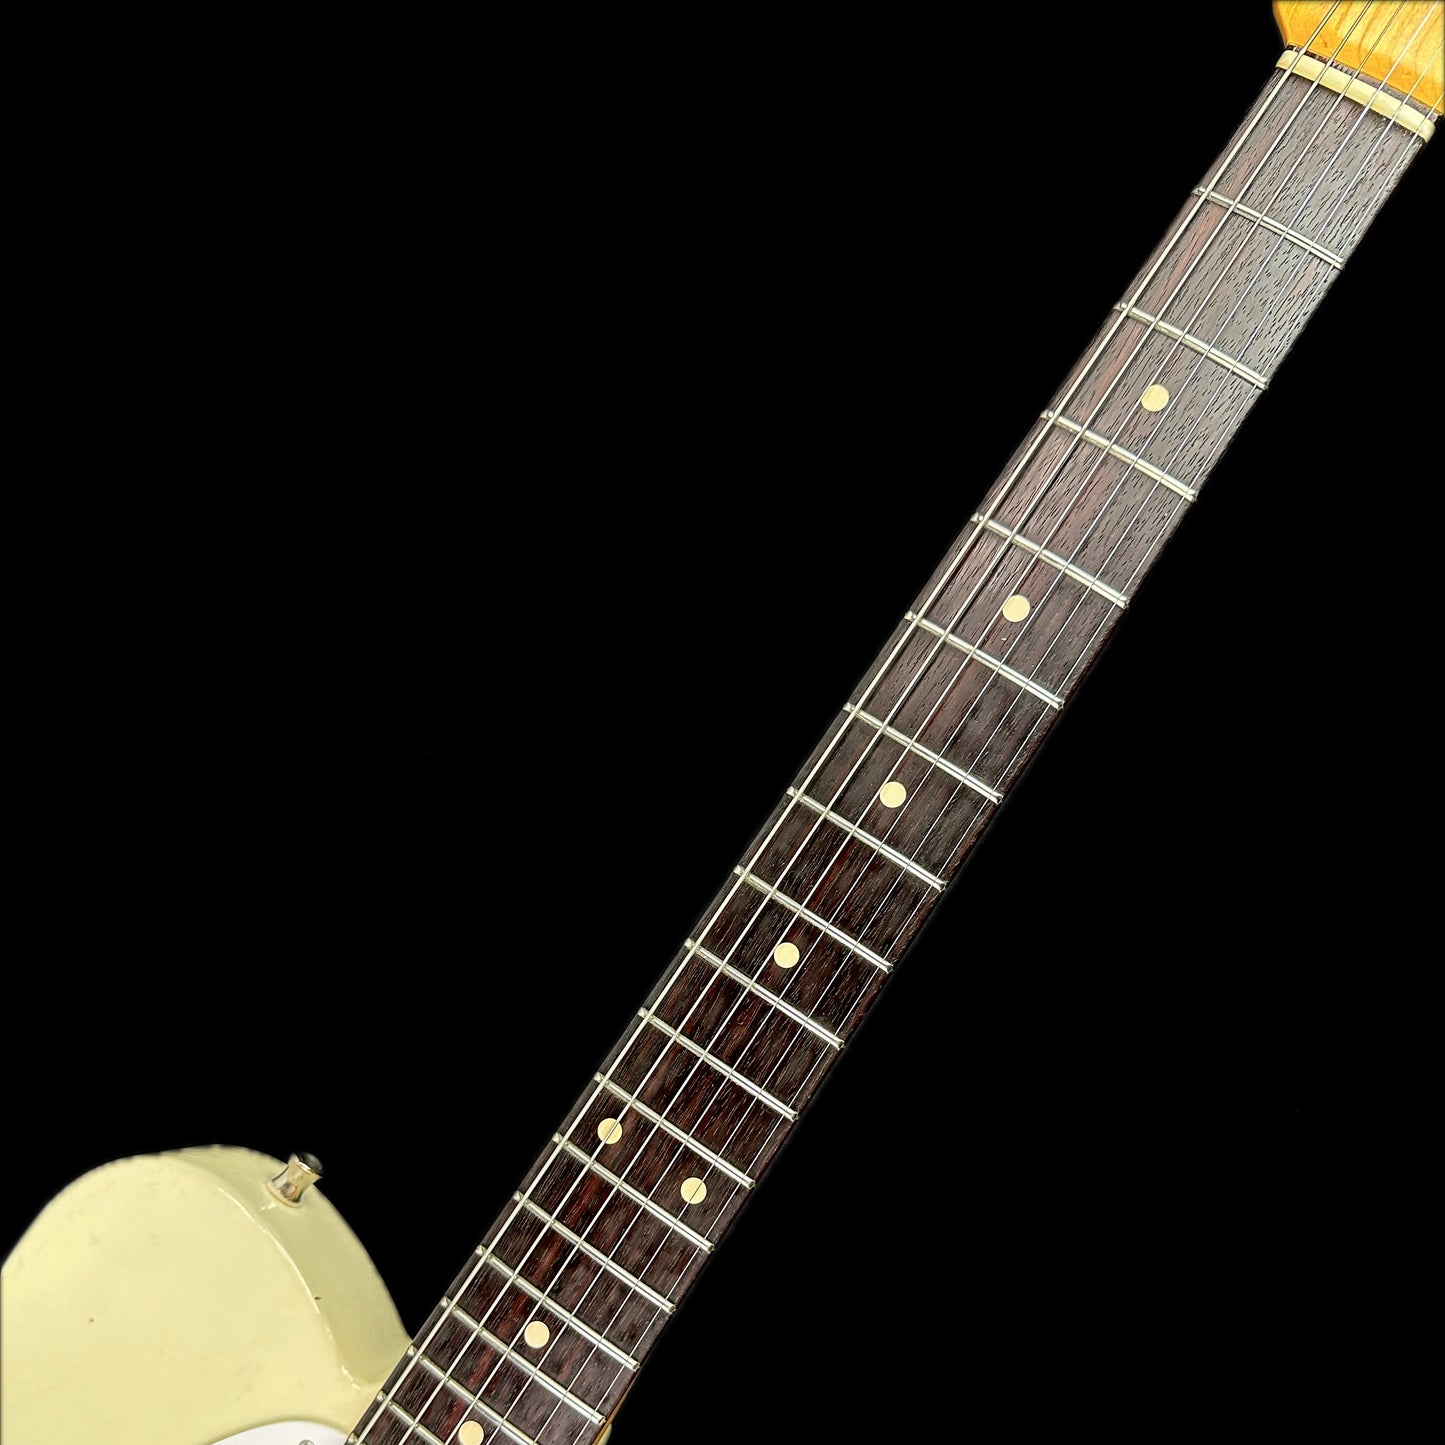 Fretboard of Used Fender Custom Shop Jimmy Page Telecaster.